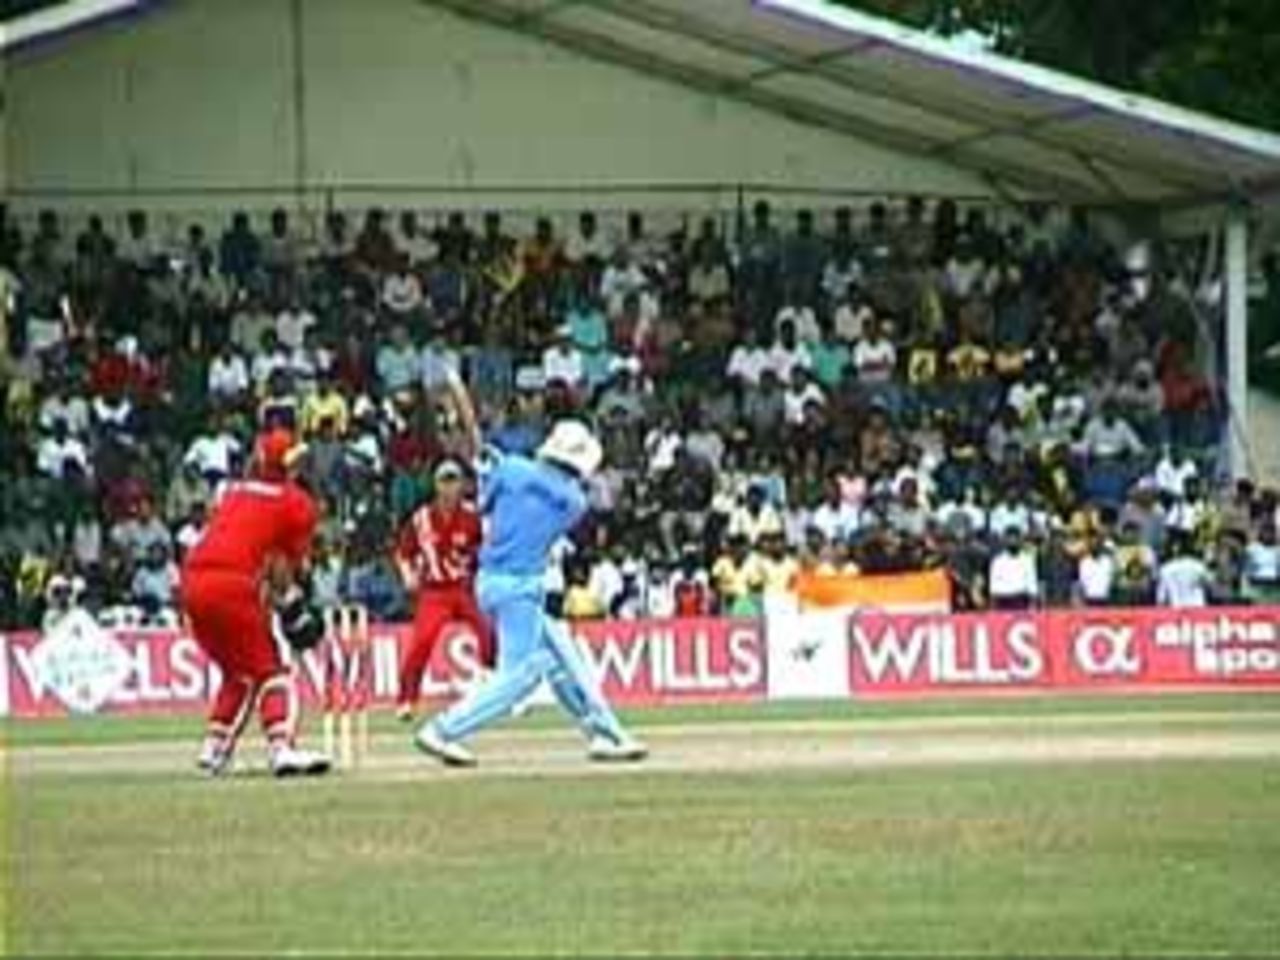 Jadeja pulls a short ball over square leg for a majestic six, India v Zimbabwe (2nd ODI), Coca-Cola Singapore Challenge, 1999-2000, Kallang Ground, Singapore, 4 Sep 1999.